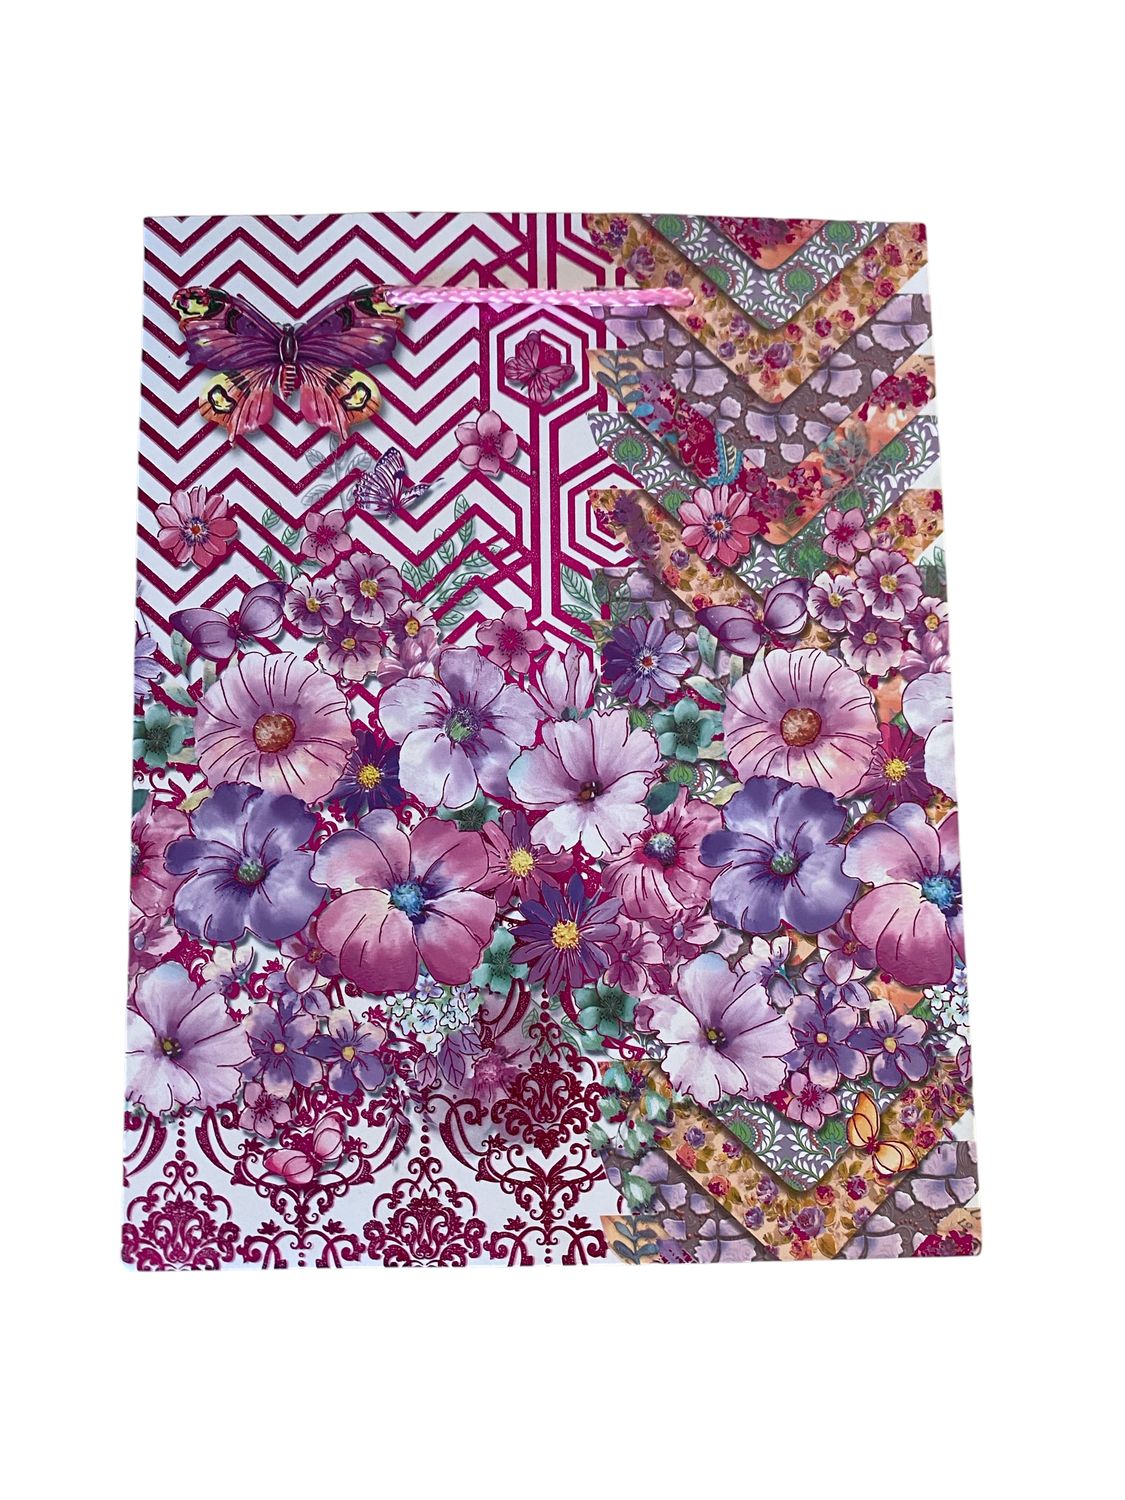 Flowers with Pink Zig Zag &amp; Hexagon Background Medium Gift Bag PK3 (R15.50 Each)